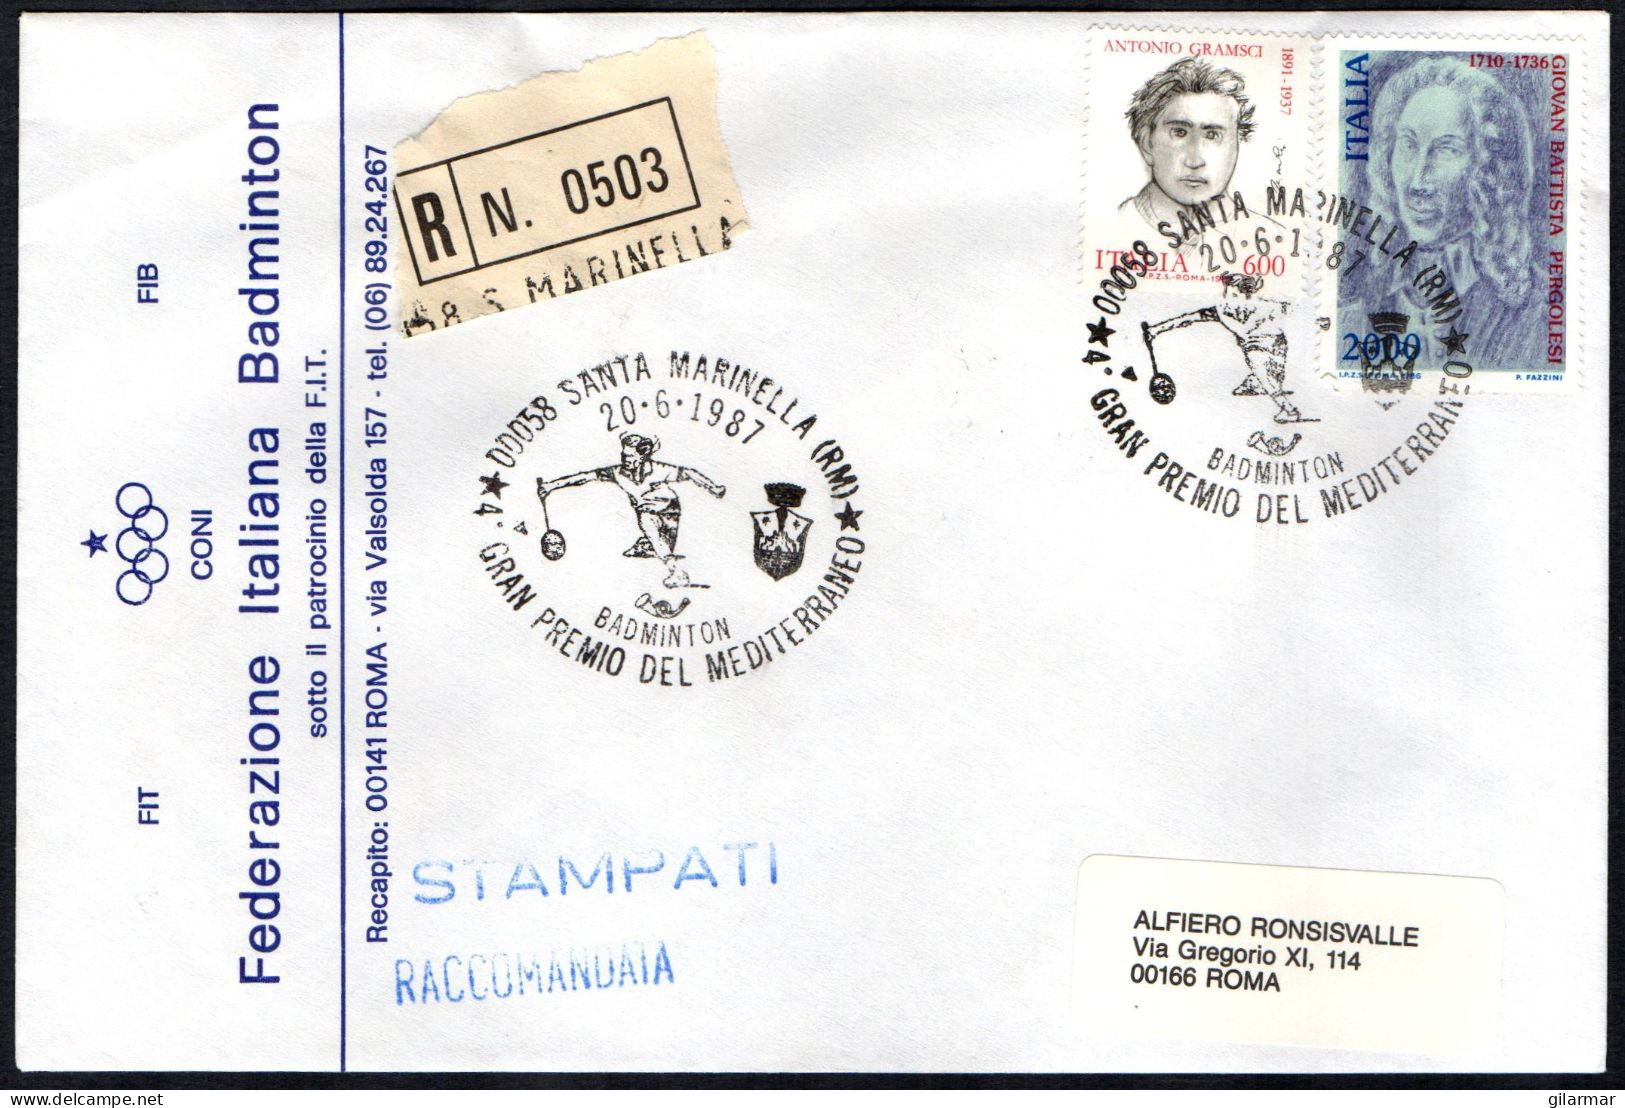 ITALIA SANTA MARINELLA (RM) 1987 - GRAN PREMIO DEL MEDITERRANEO DI BADMINTON - RACCOMANDATA - A - Badminton